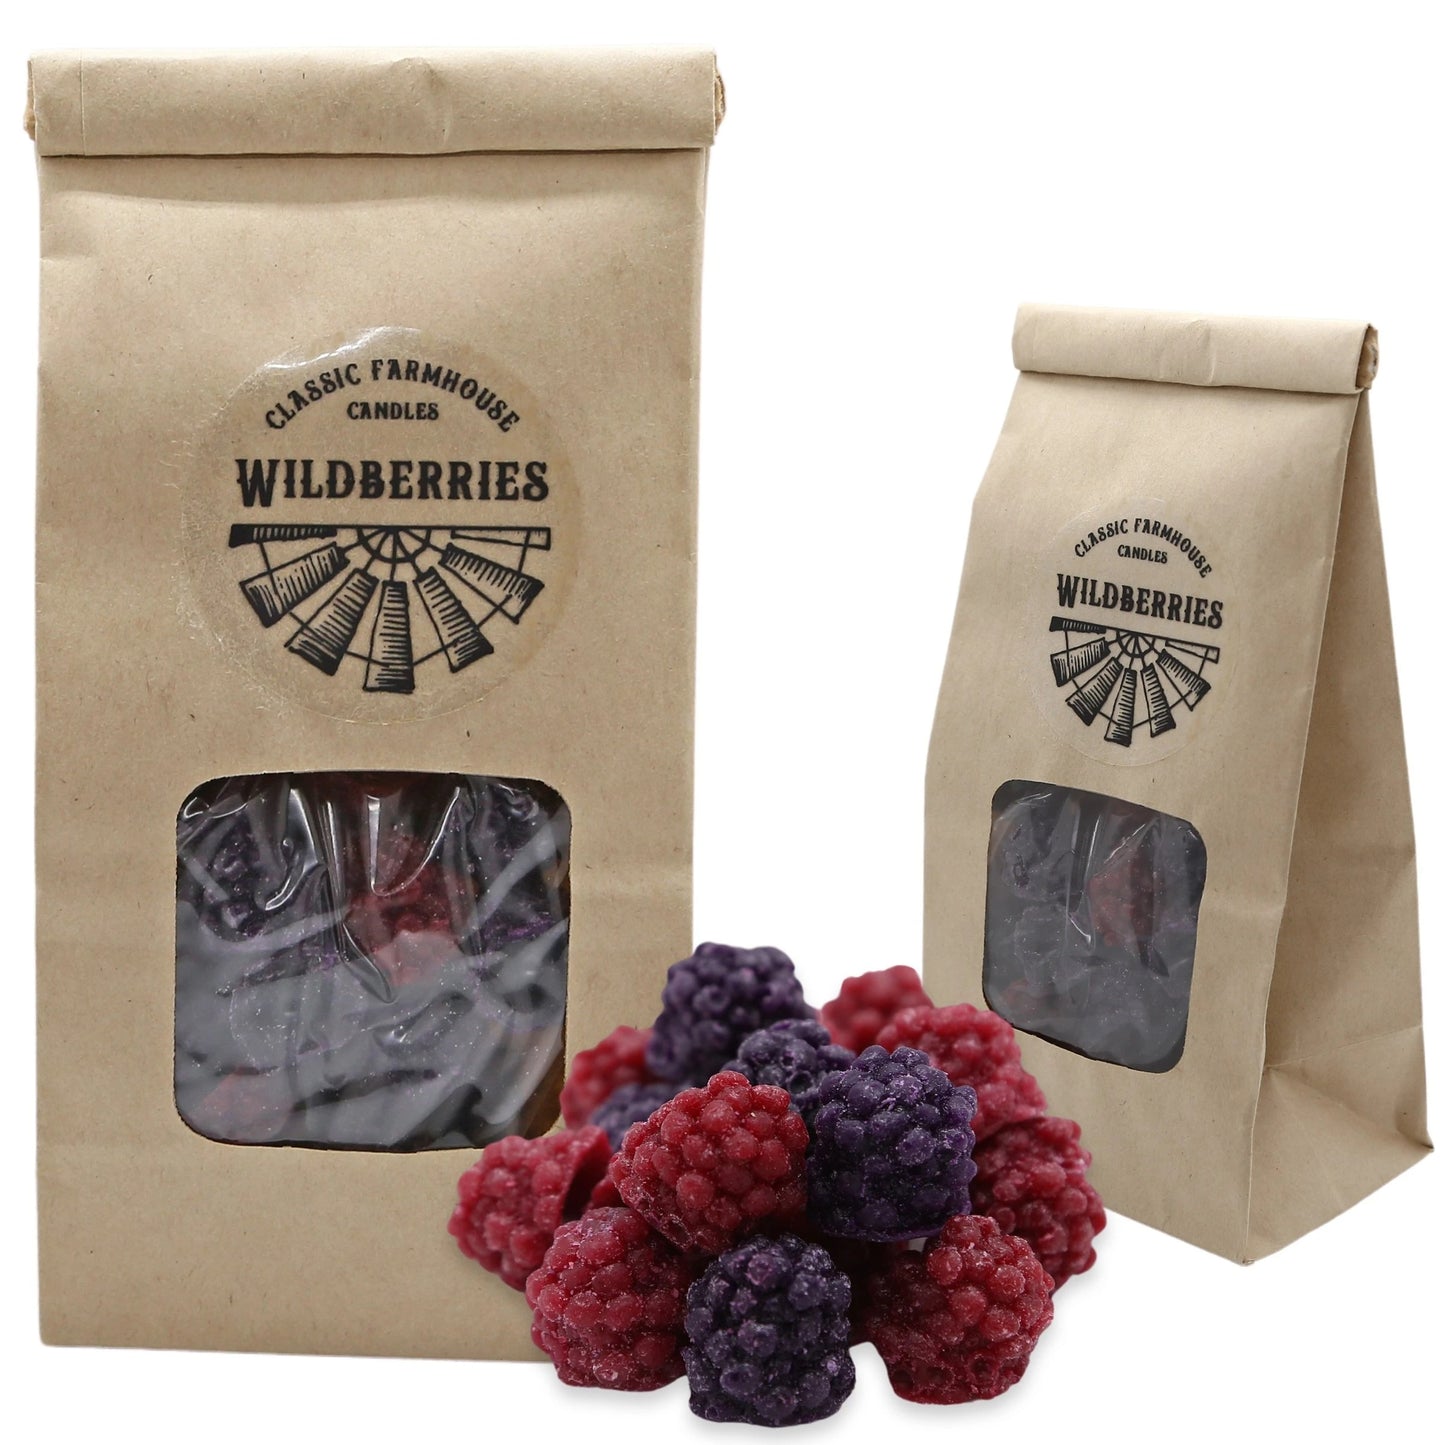 Wildberries Wax Melts